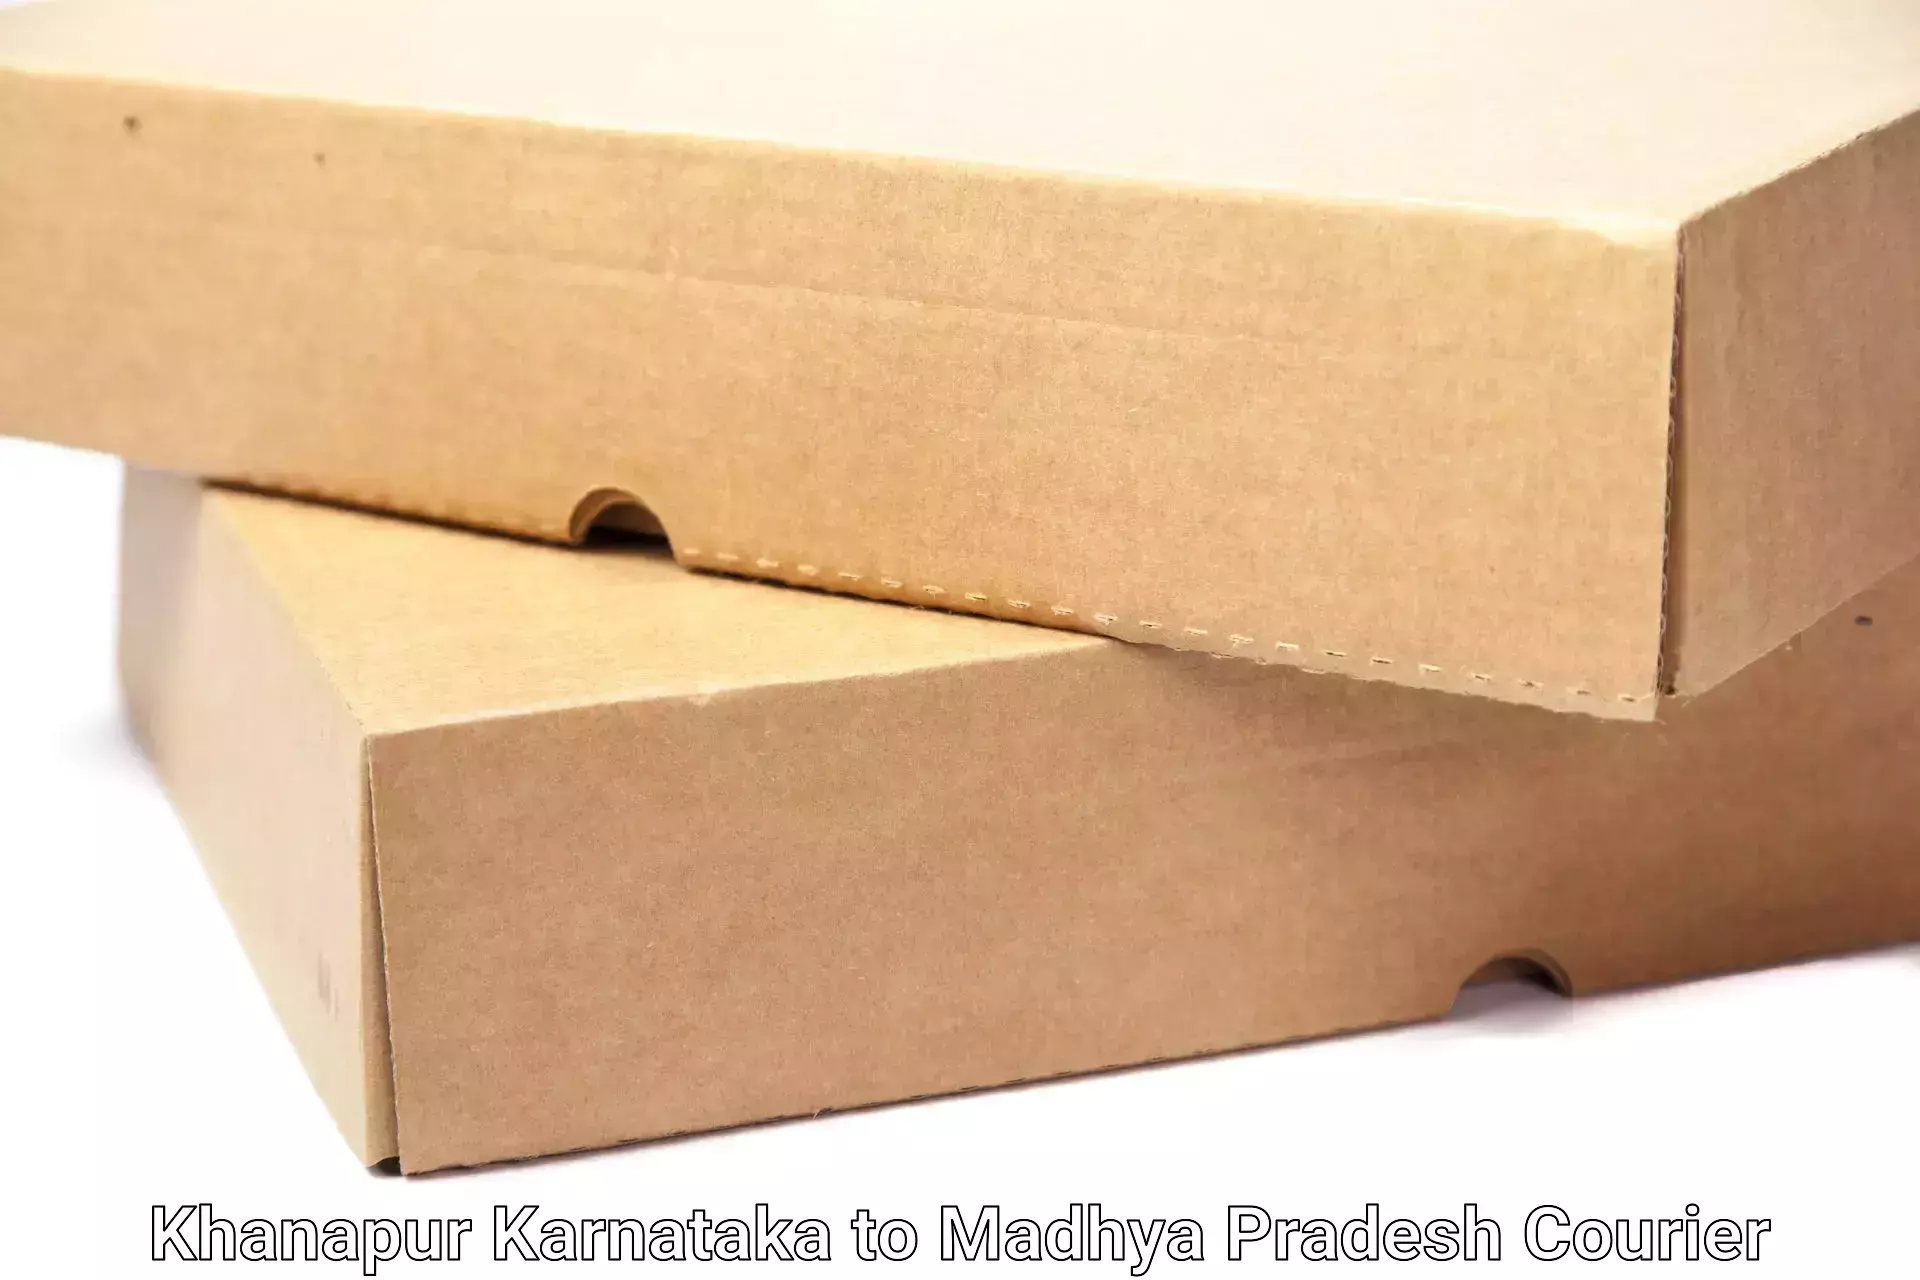 Affordable home movers Khanapur Karnataka to Madhya Pradesh